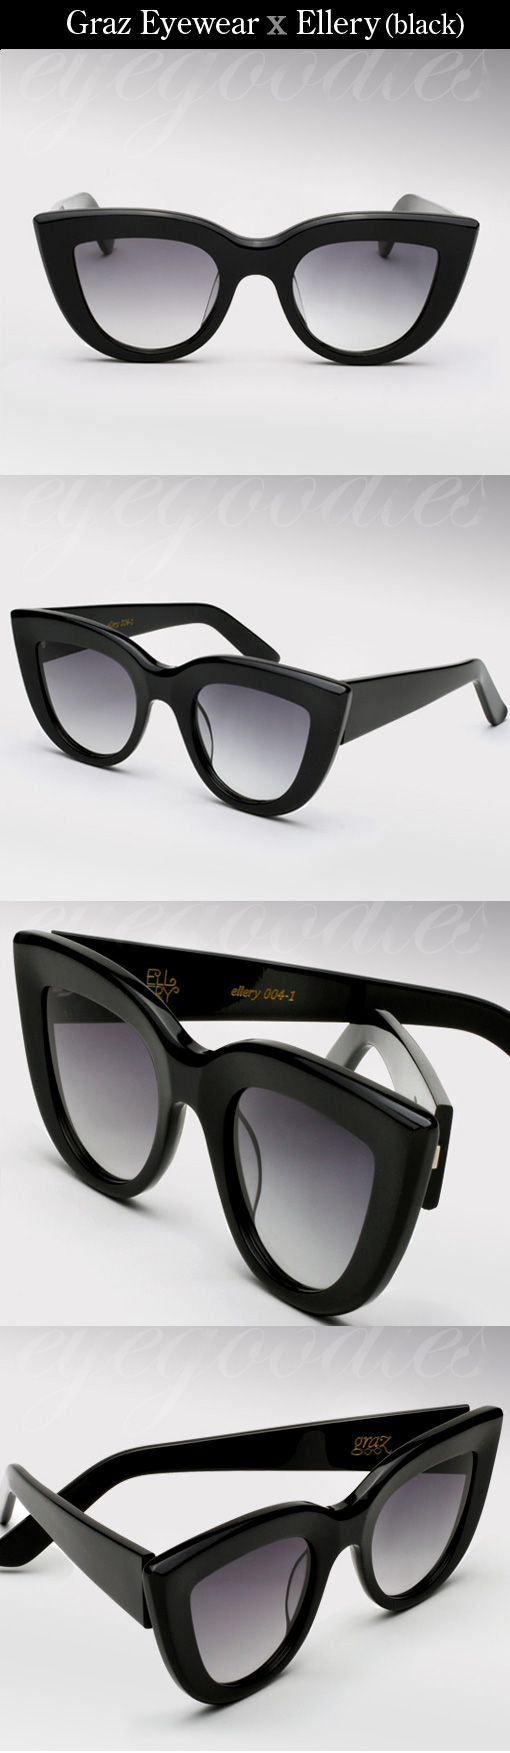 Graz Ellery sunglasses in black